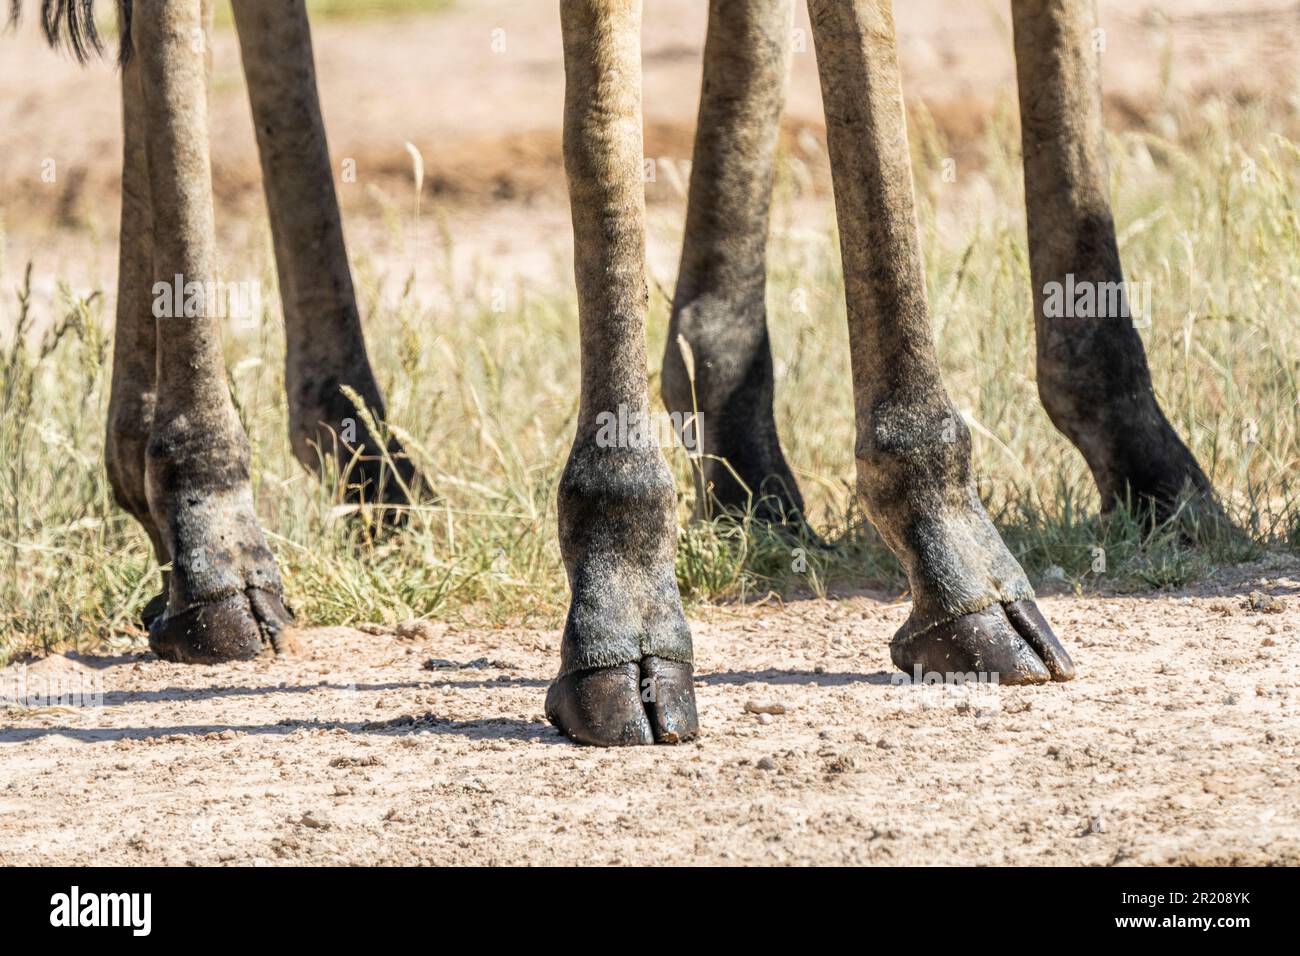 Giraffe feet close up of the long feet and hooves. Kalahari, Kgalagadi Transfrontier Park, South Africa Stock Photo